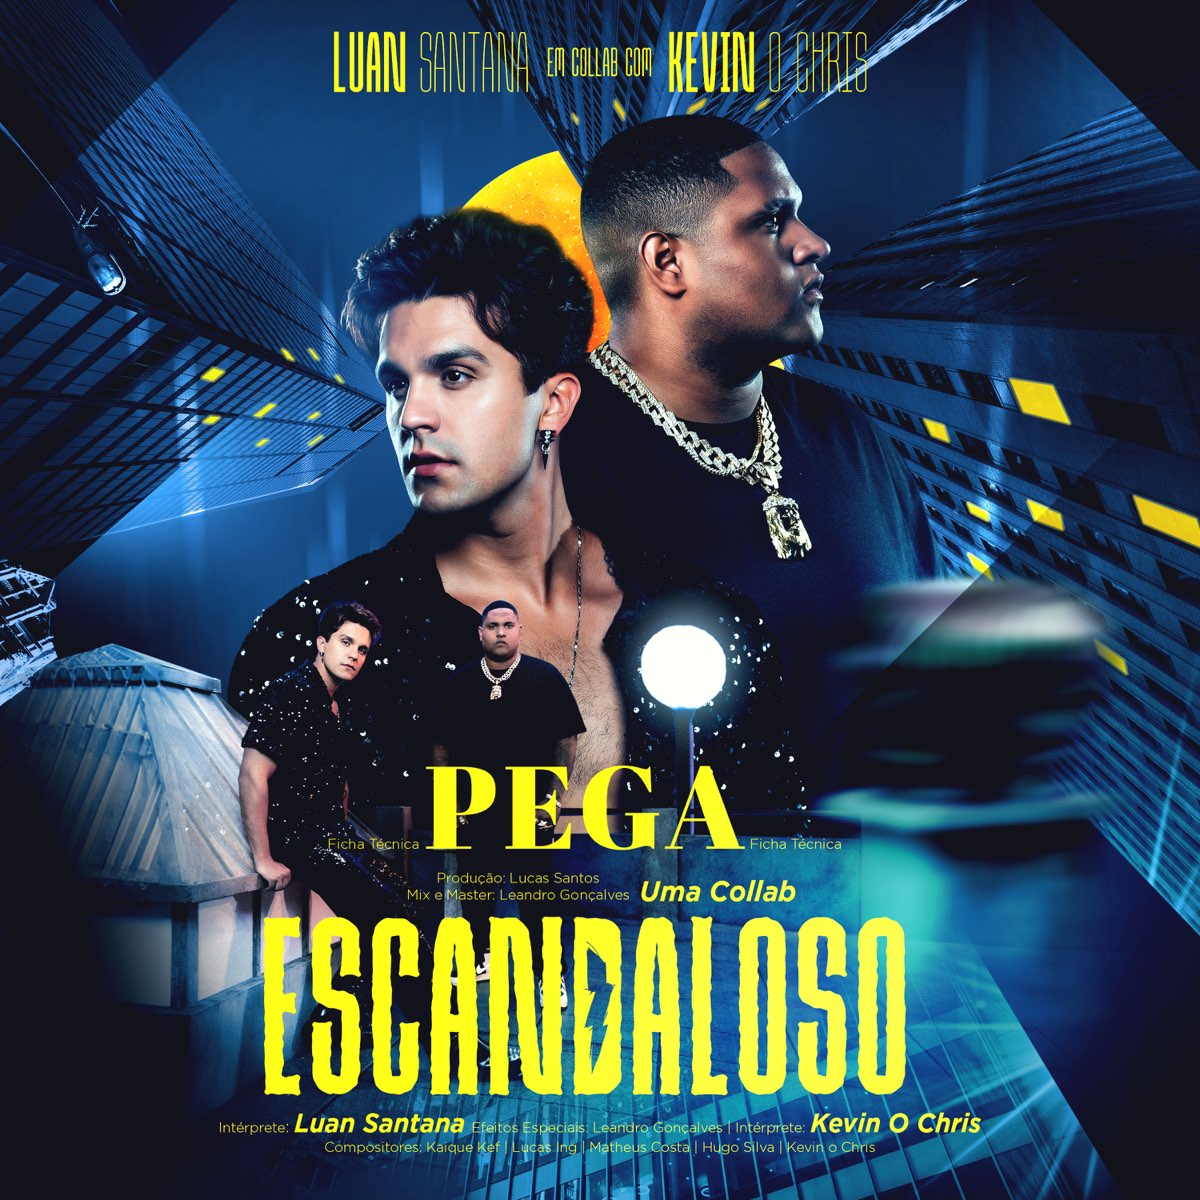 PEGA ESCANDALOSO - Single - Album by Luan Santana & MC Kevin O Chris - Apple Music